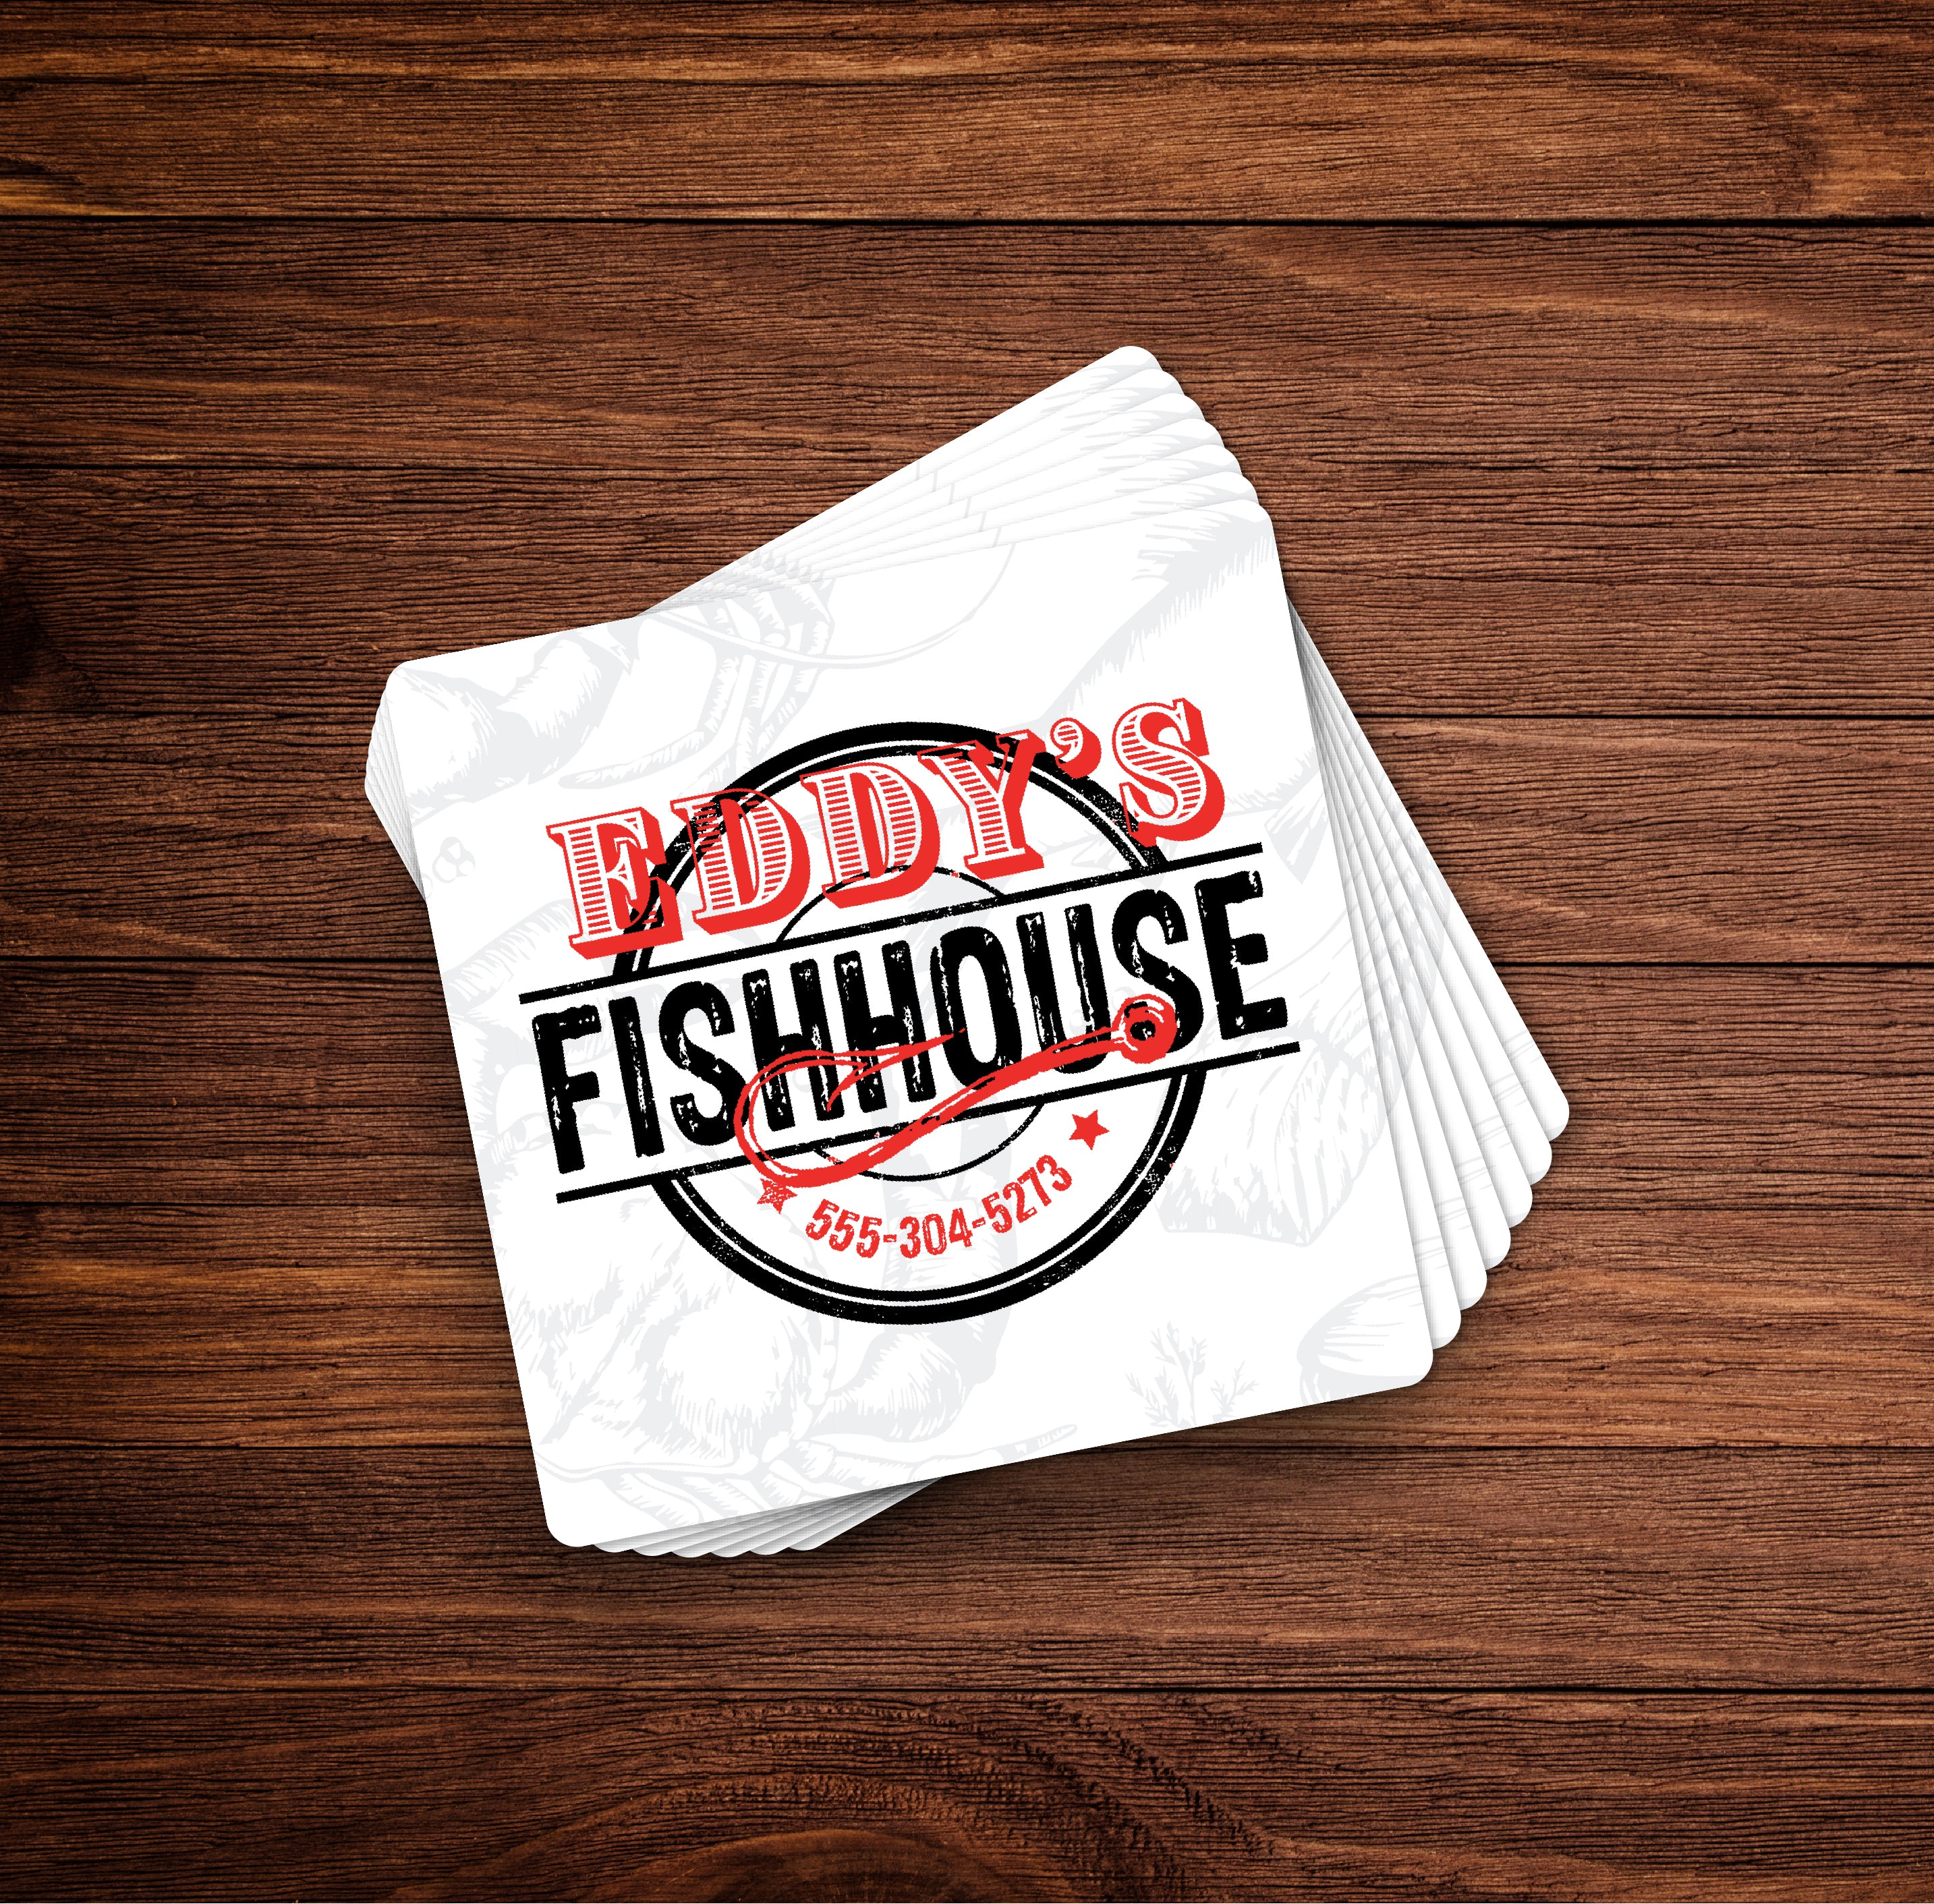 Upscale Fish House Menu - Drink Coasters Design Template